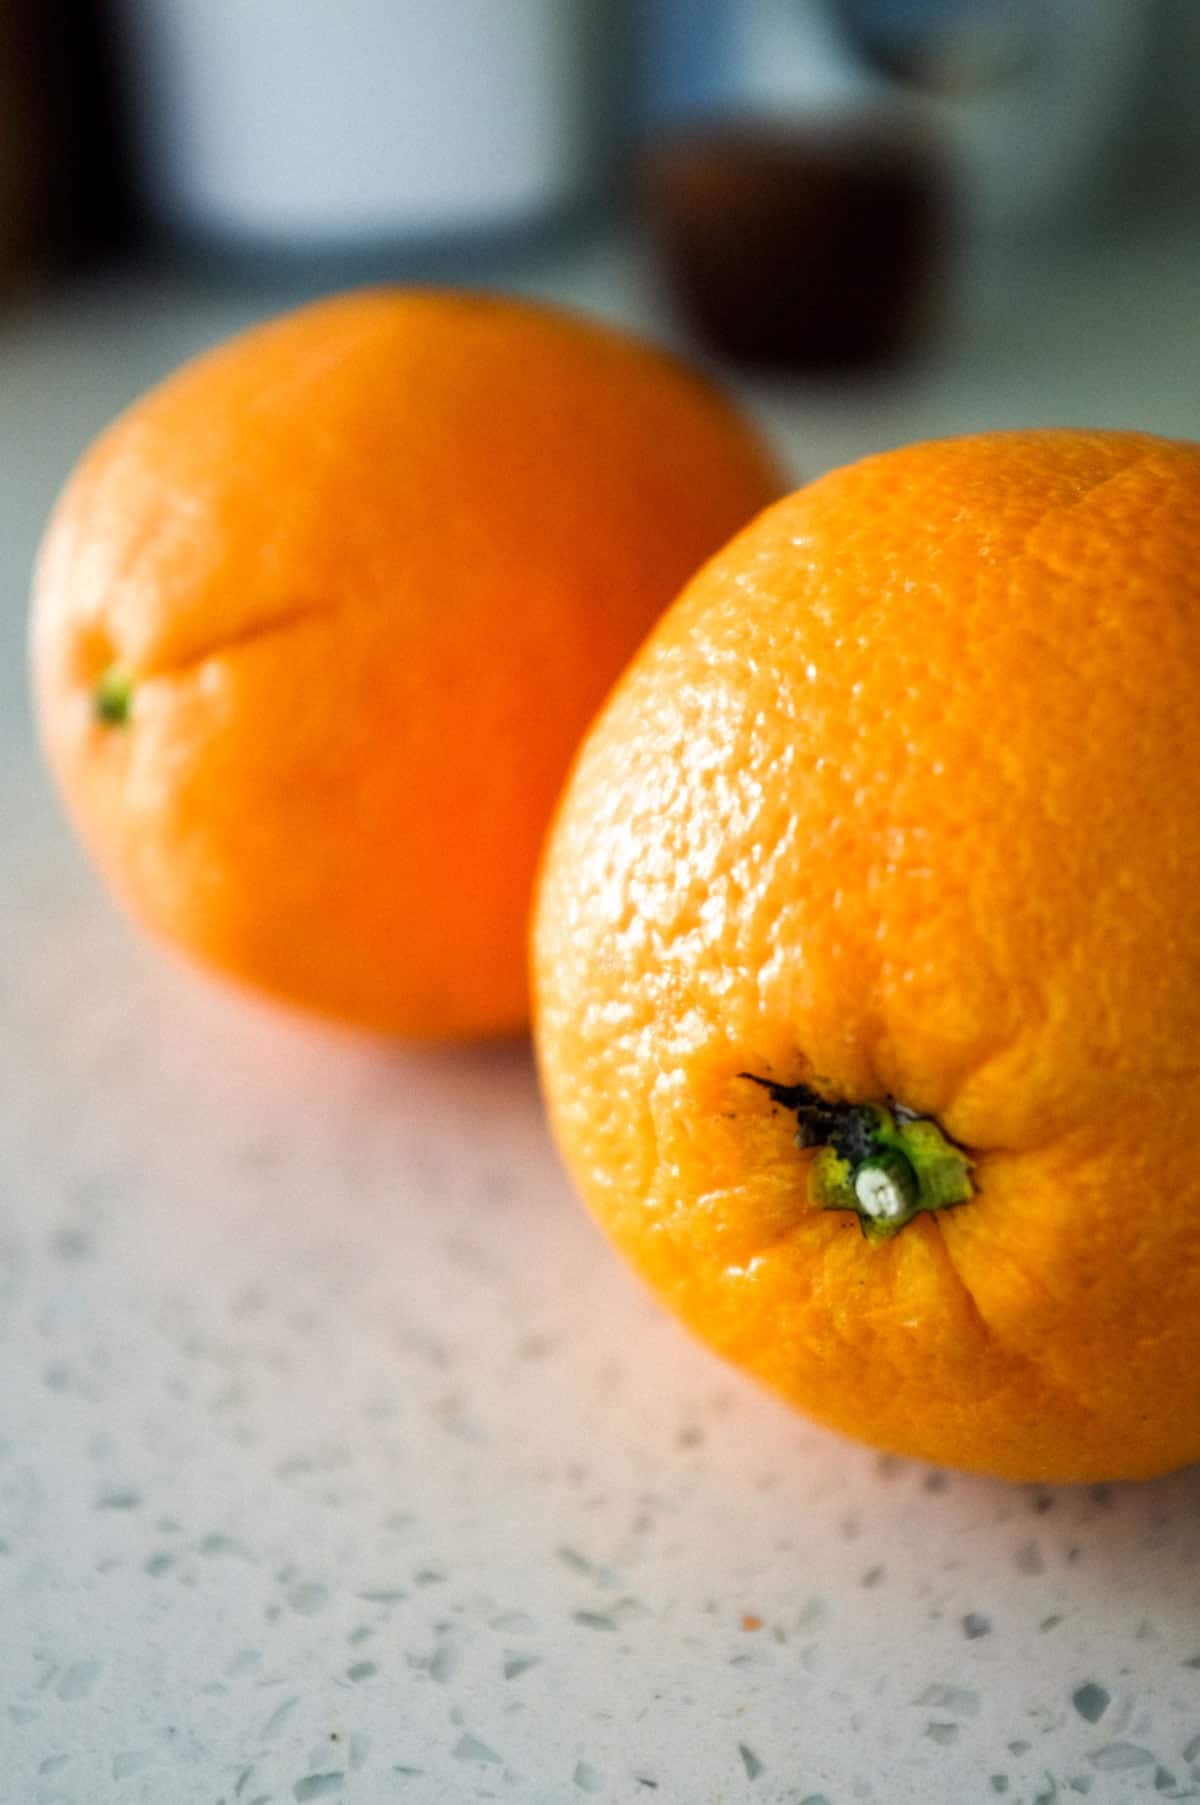 two navel oranges